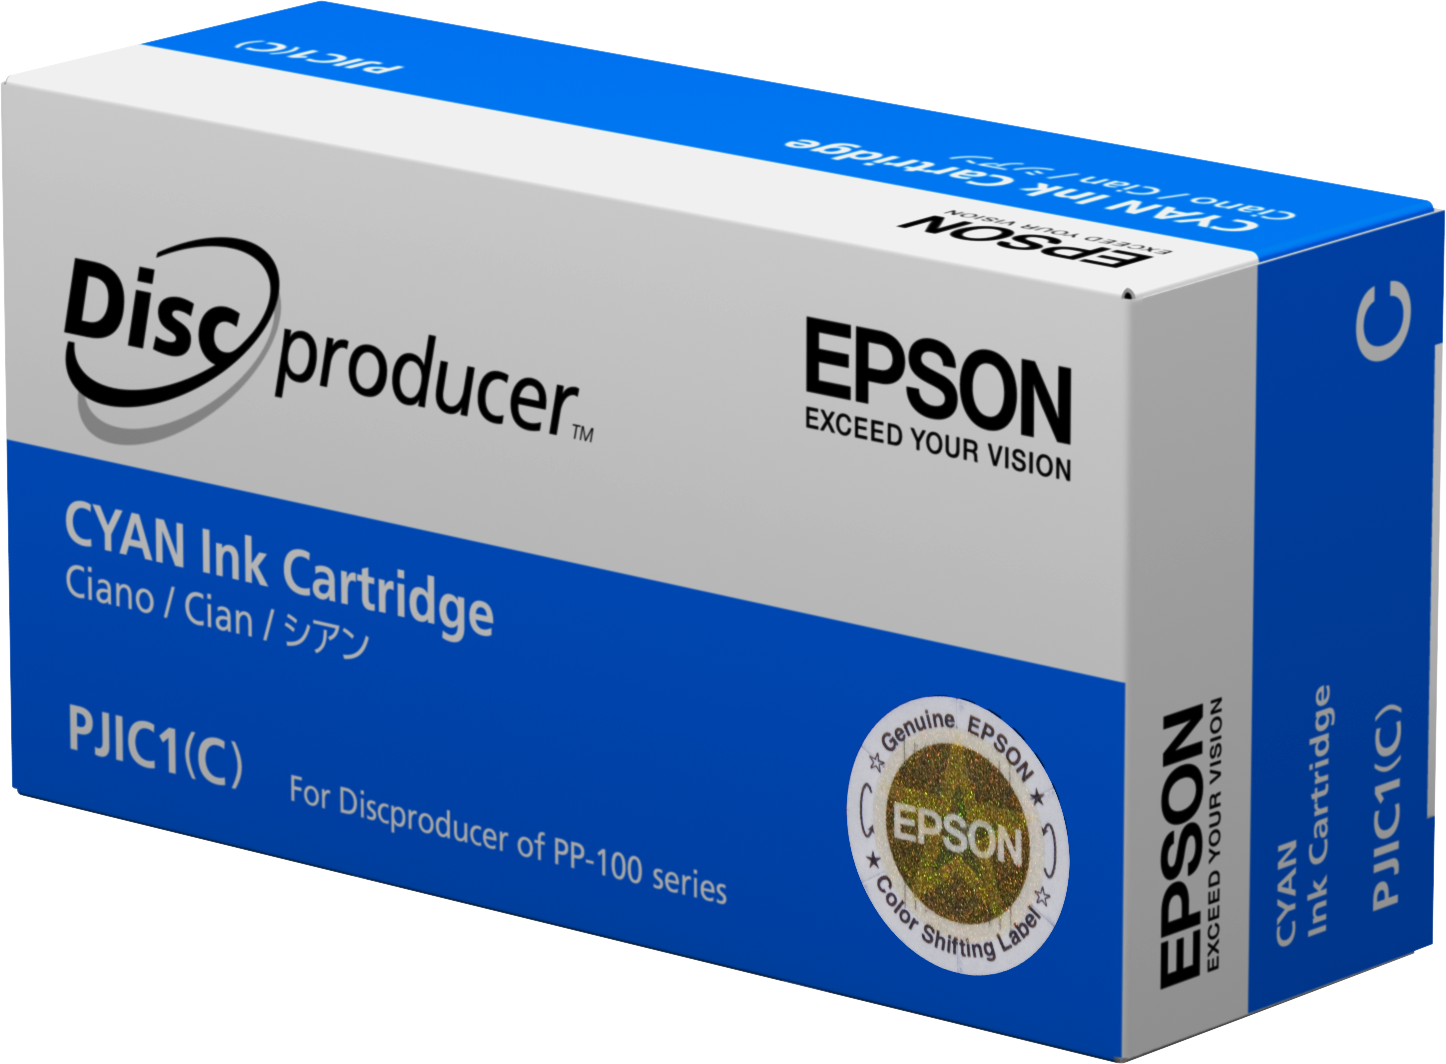 Epson Ink Cartridge, Cyan single pack / cyaan